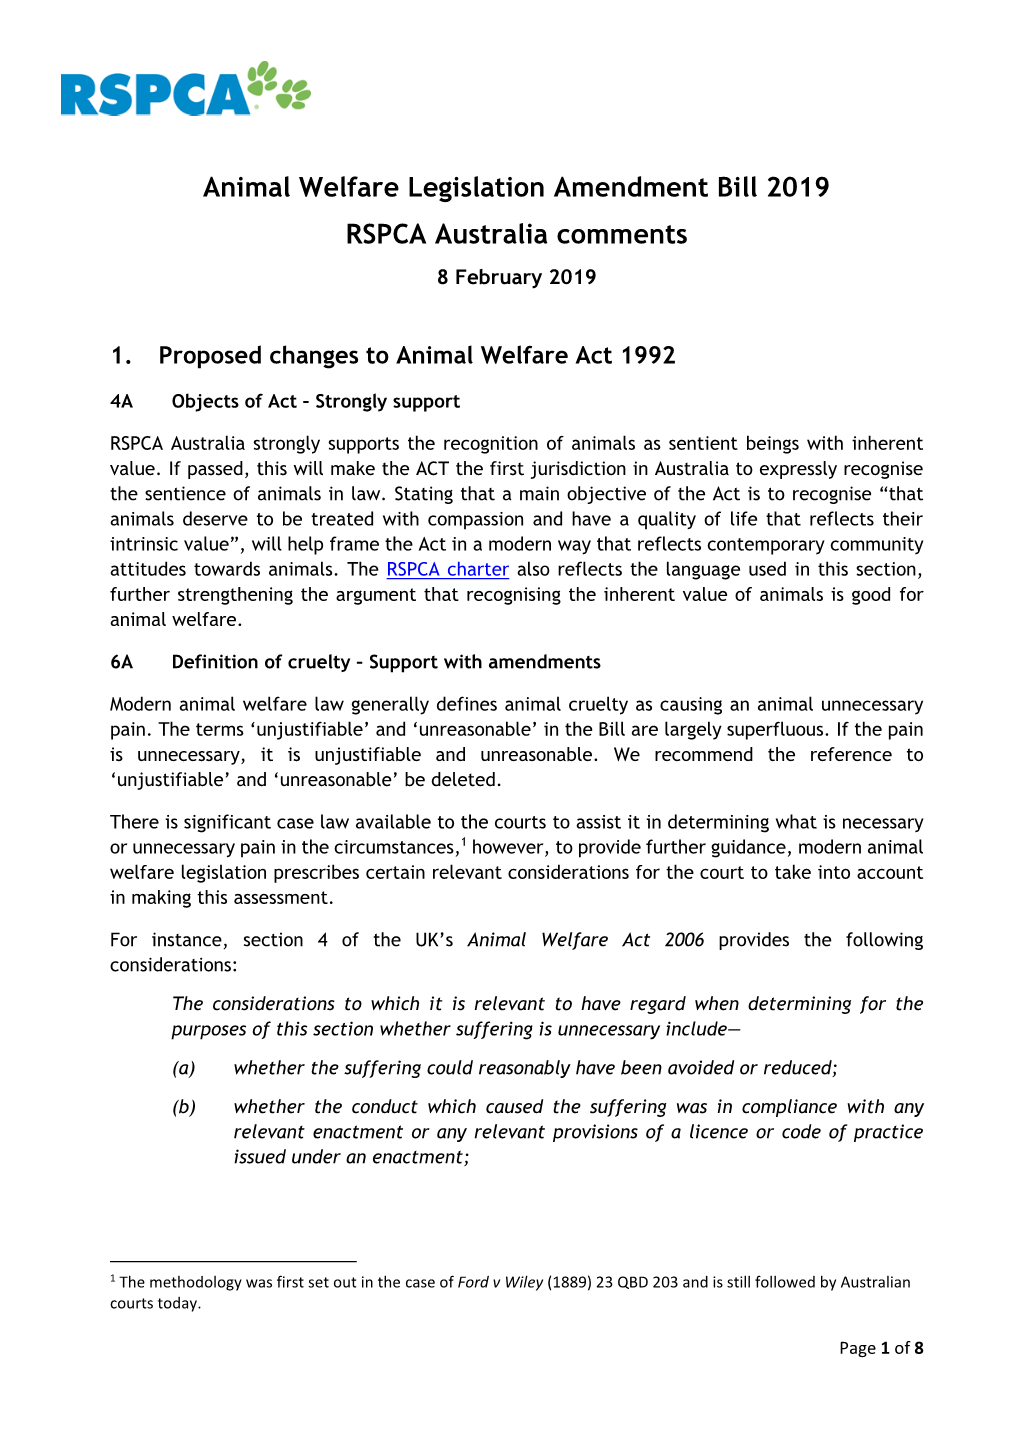 Animal Welfare Legislation Amendment Bill 2019 RSPCA Australia Comments 8 February 2019